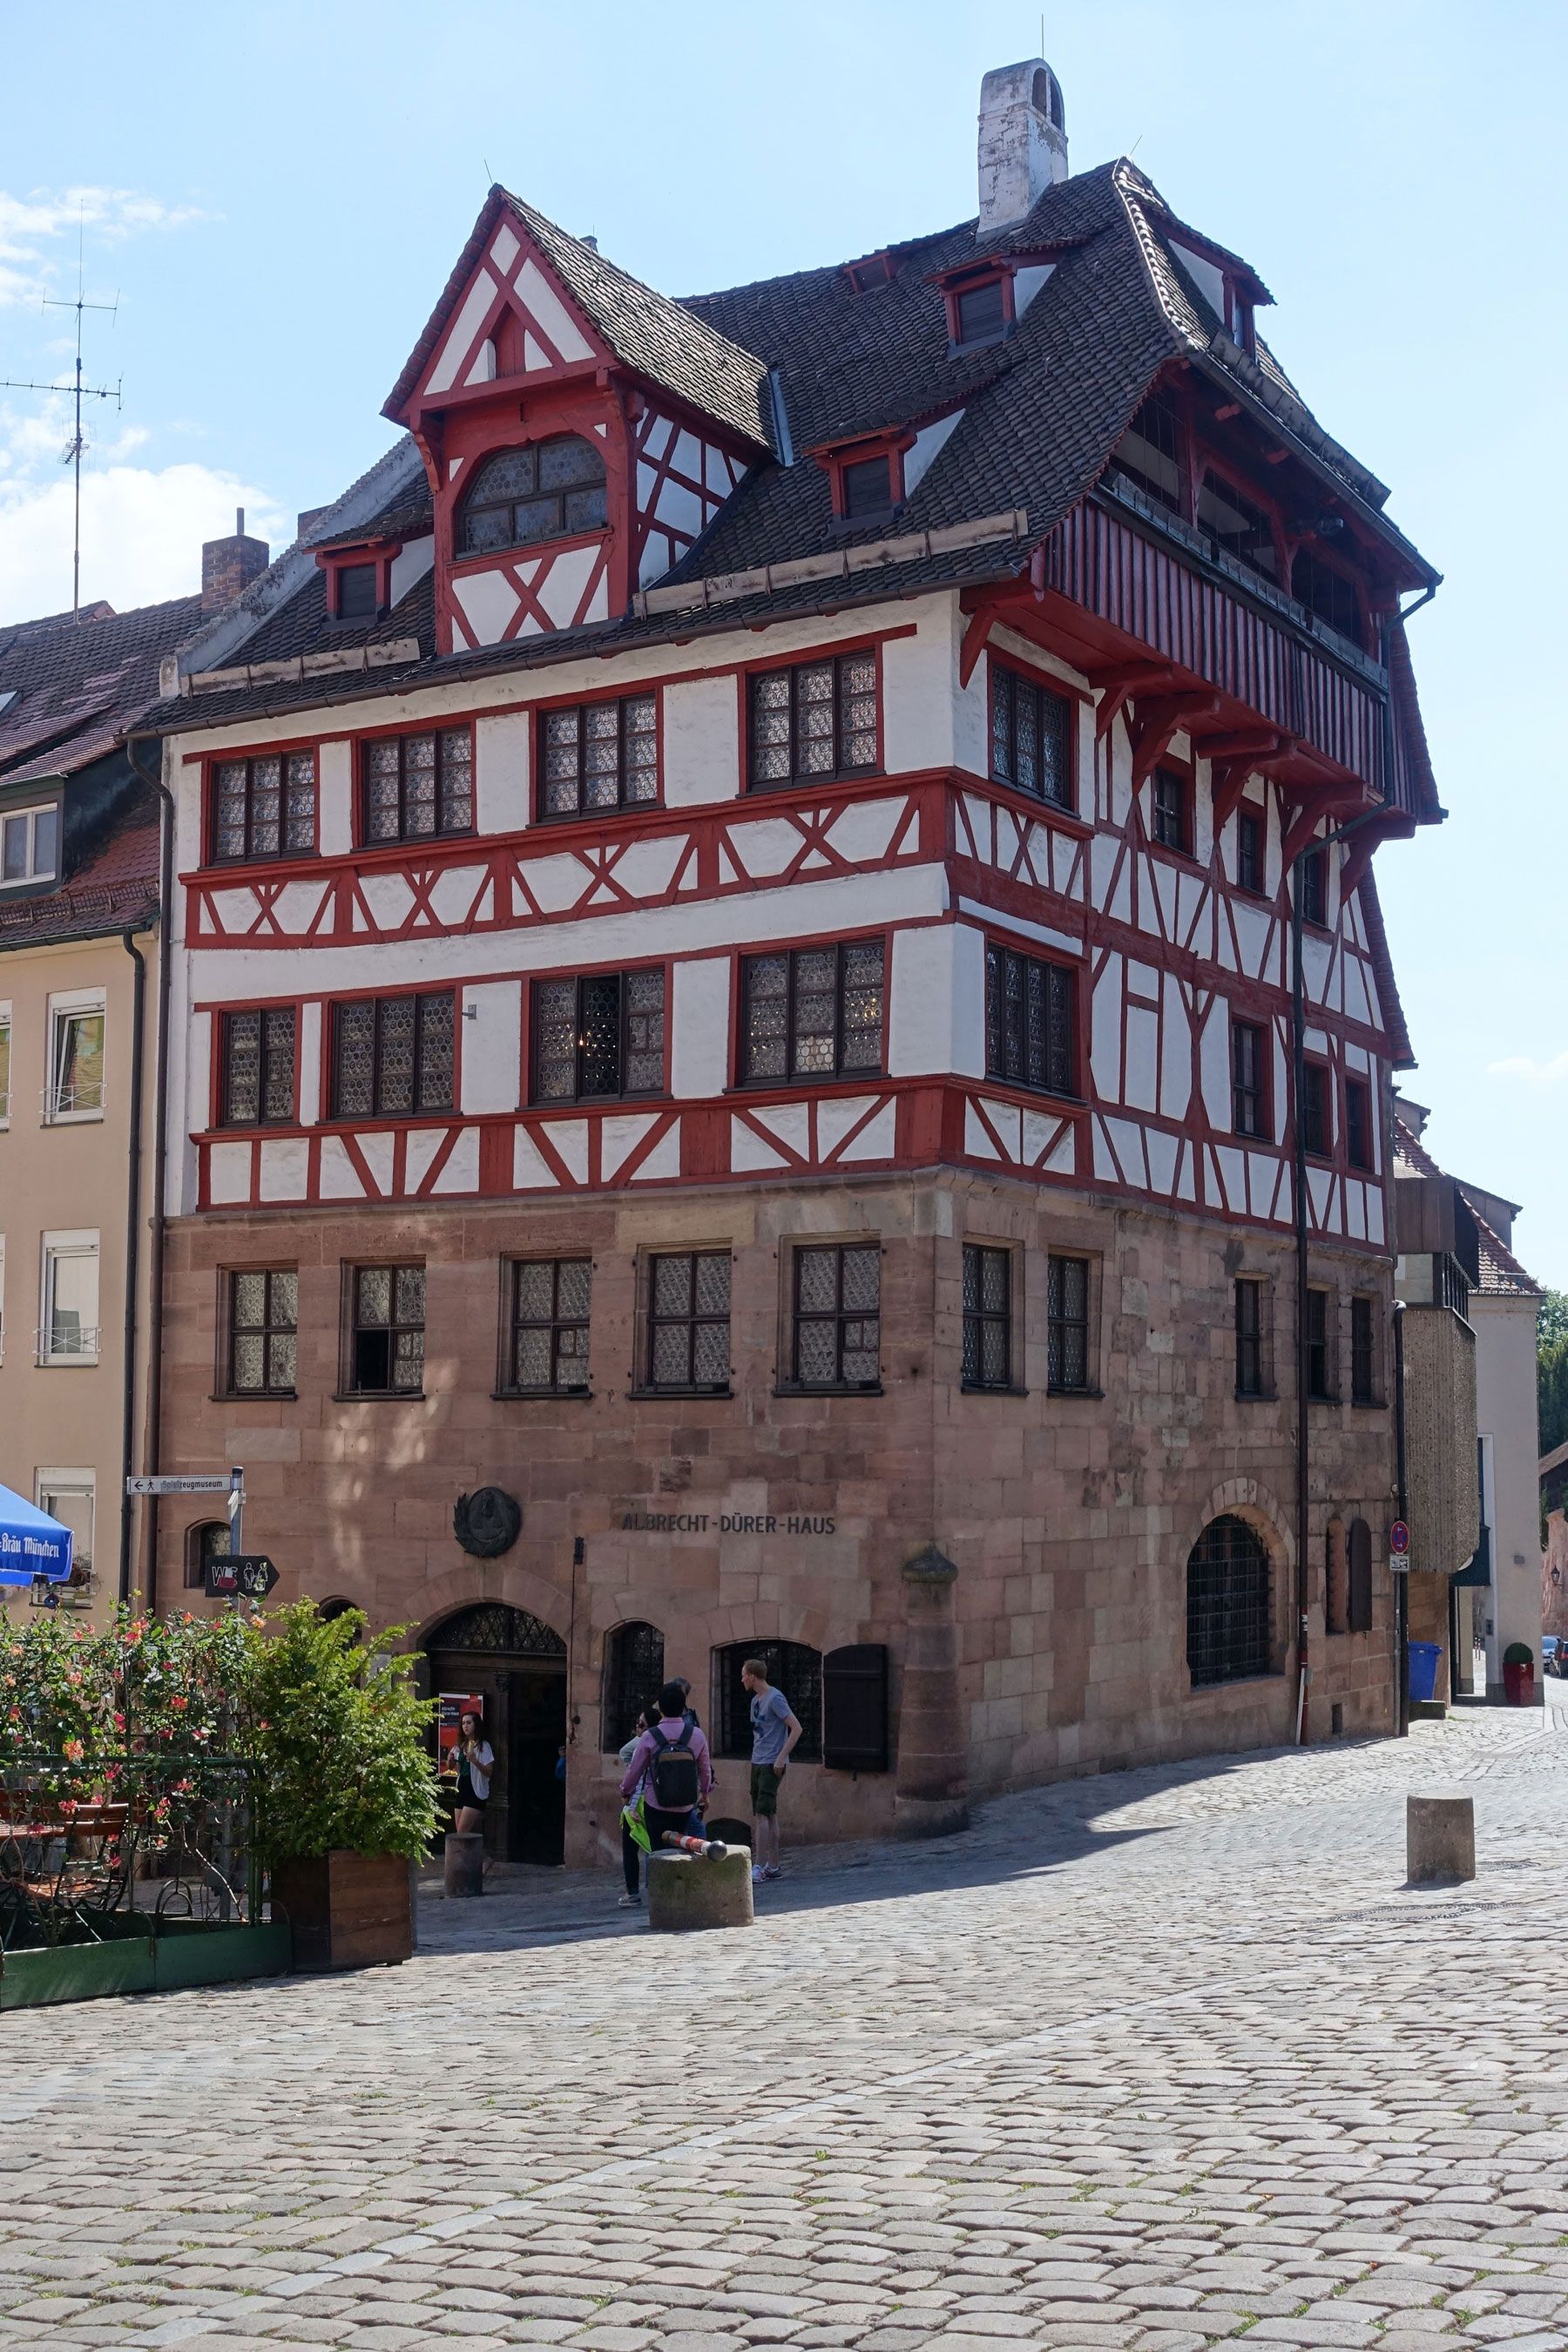 Albrecht Dürer's House in Alstadt, Germany